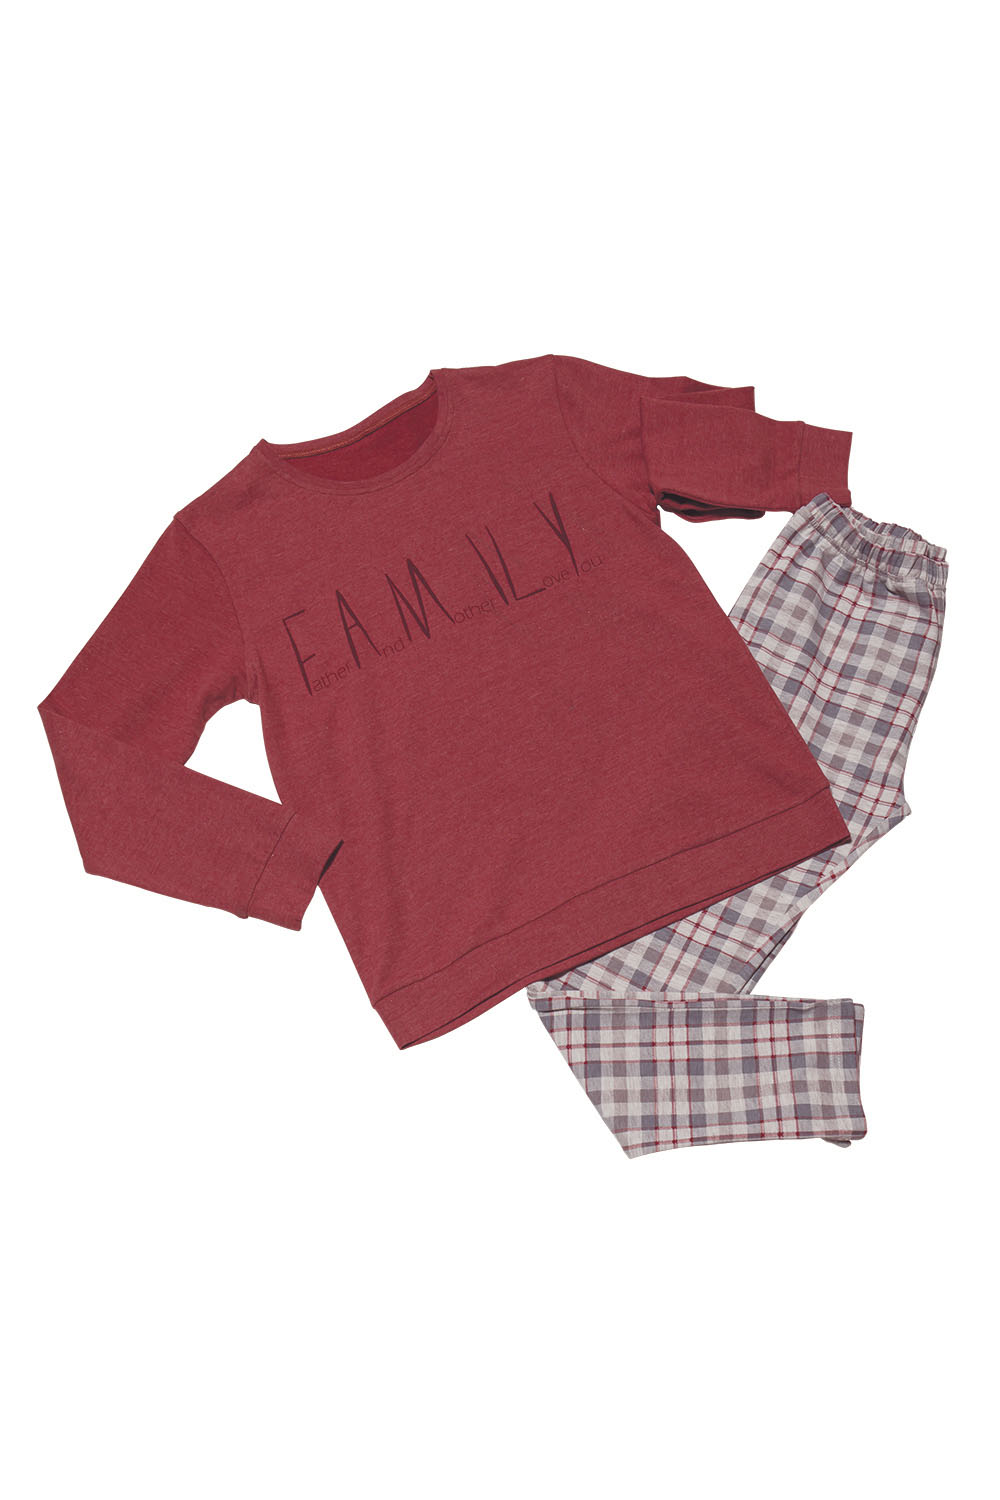 Hays Family Kız Çocuk 2li Pijama Takımı